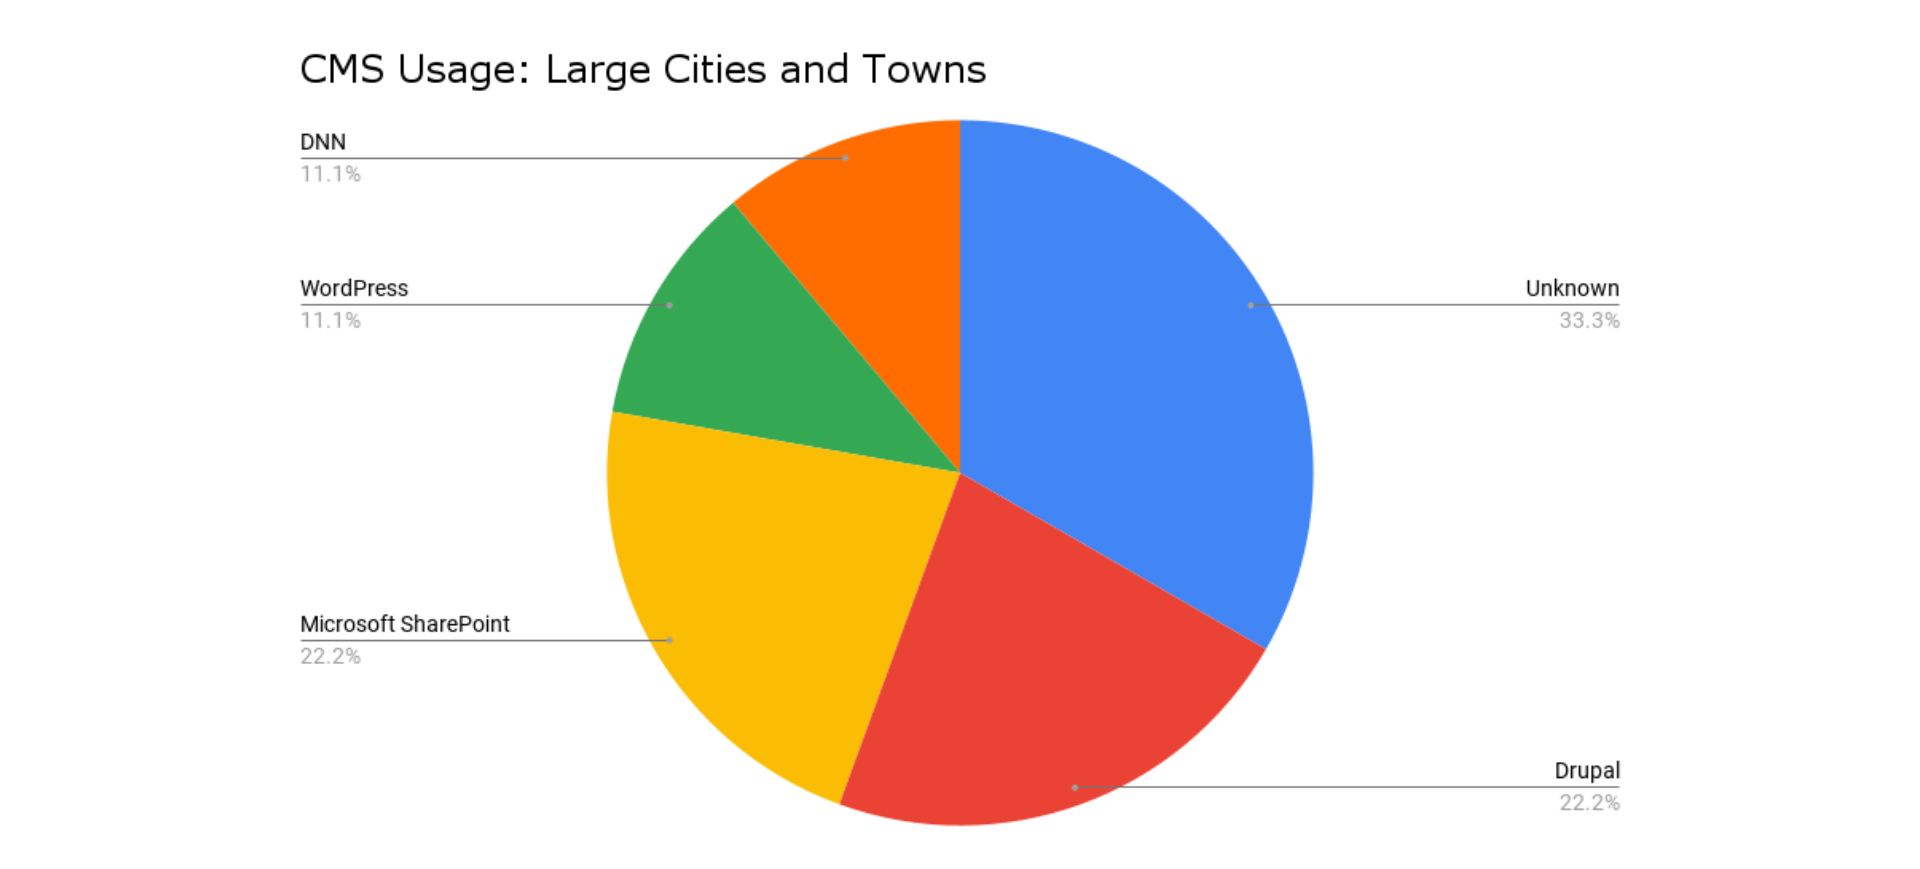 cms usage: large cities